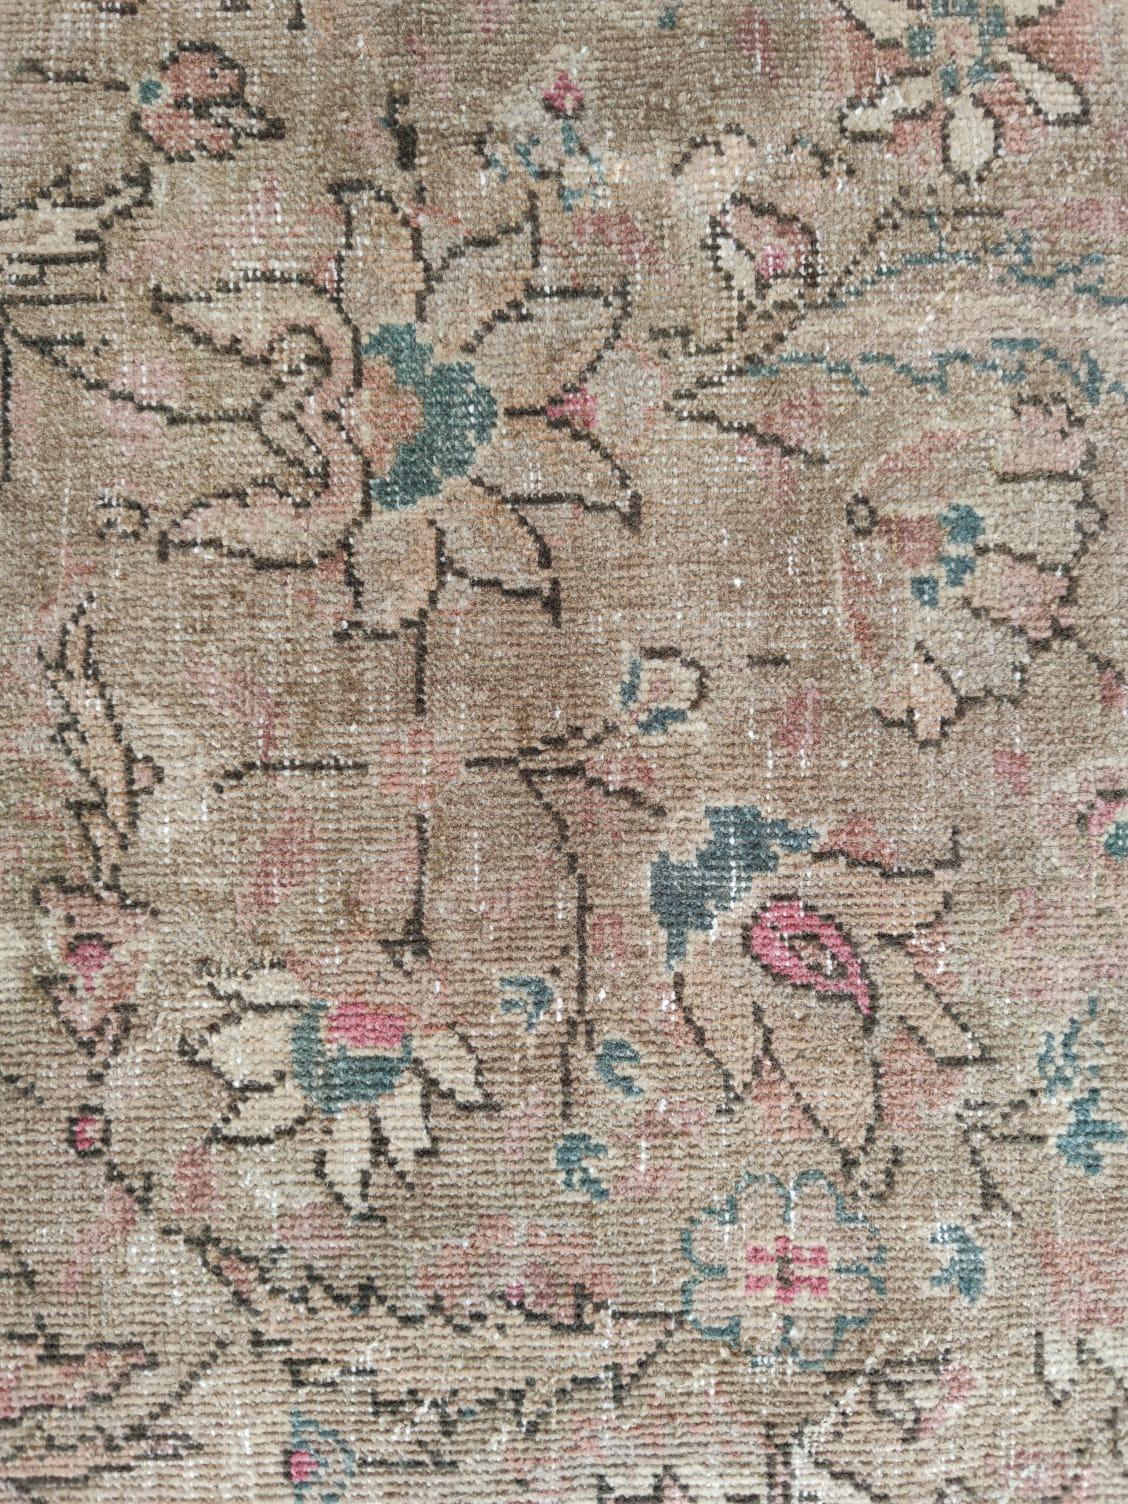 8.5x11 Ft Vintage Handmade Floral Pattern Turkish Wool Area Rug in Tawny Brown 4